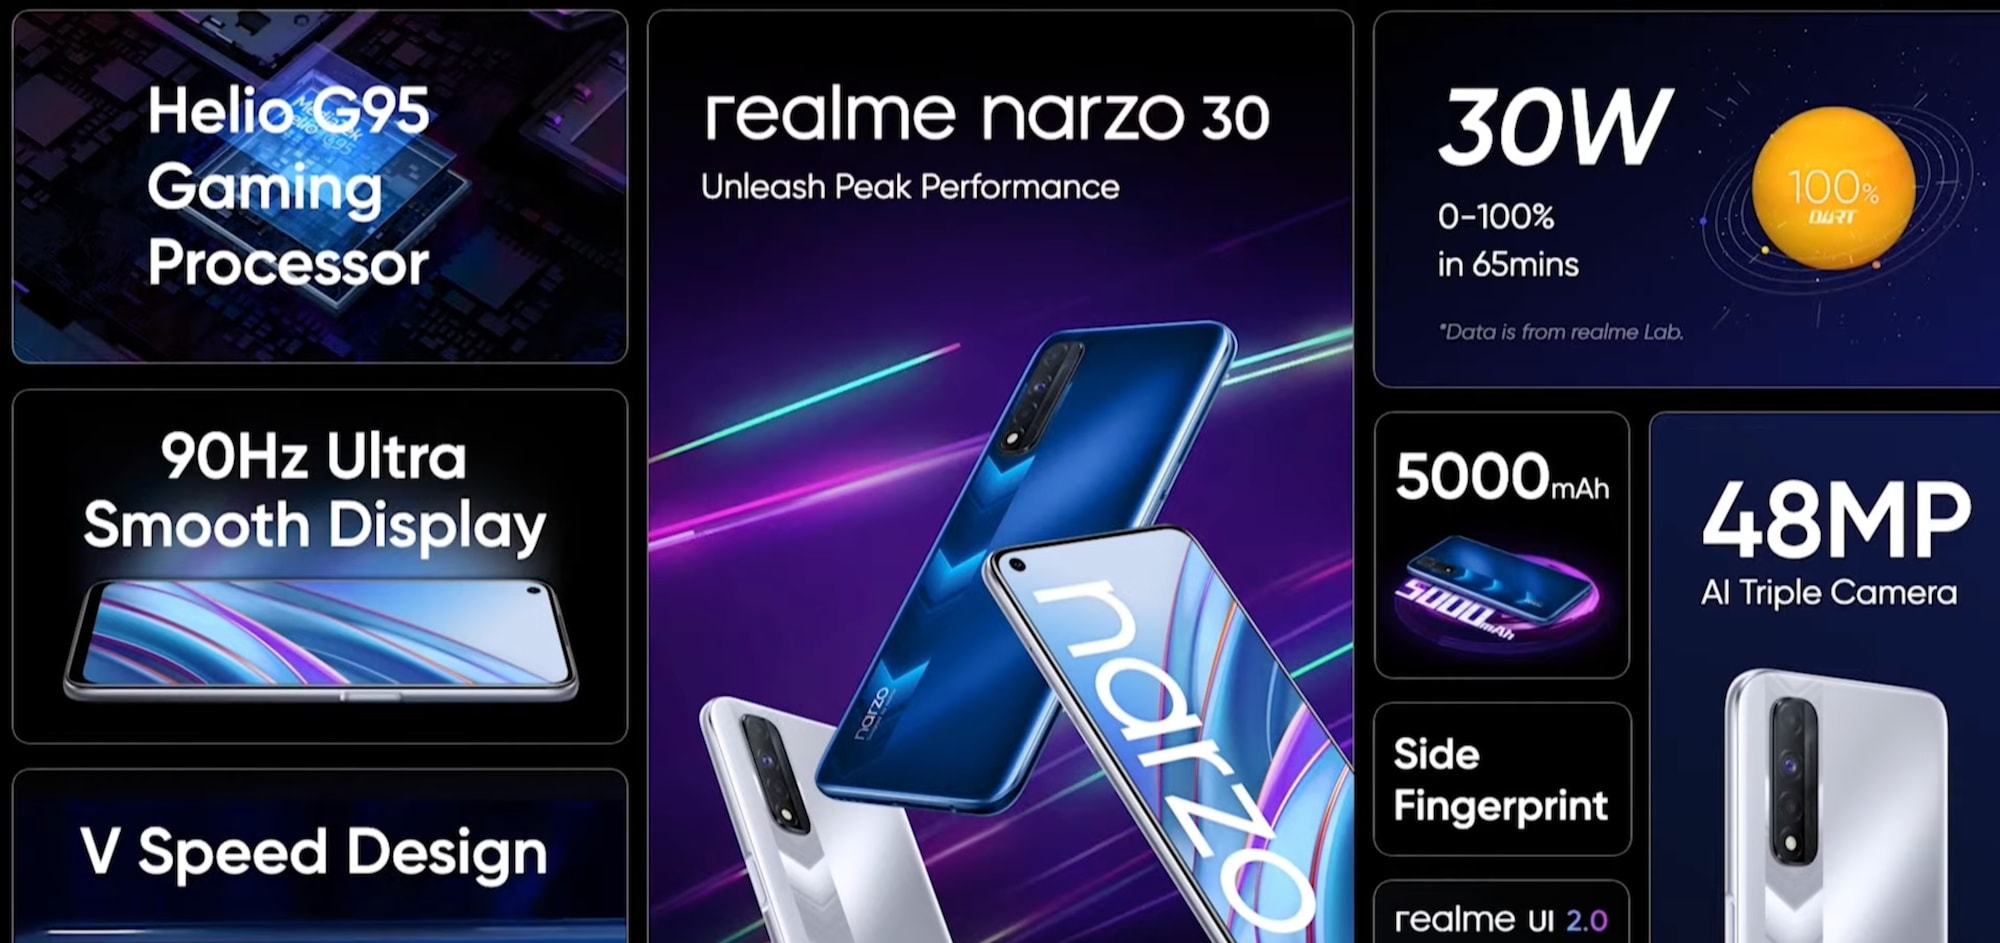 Realme Narzo 30 specifications